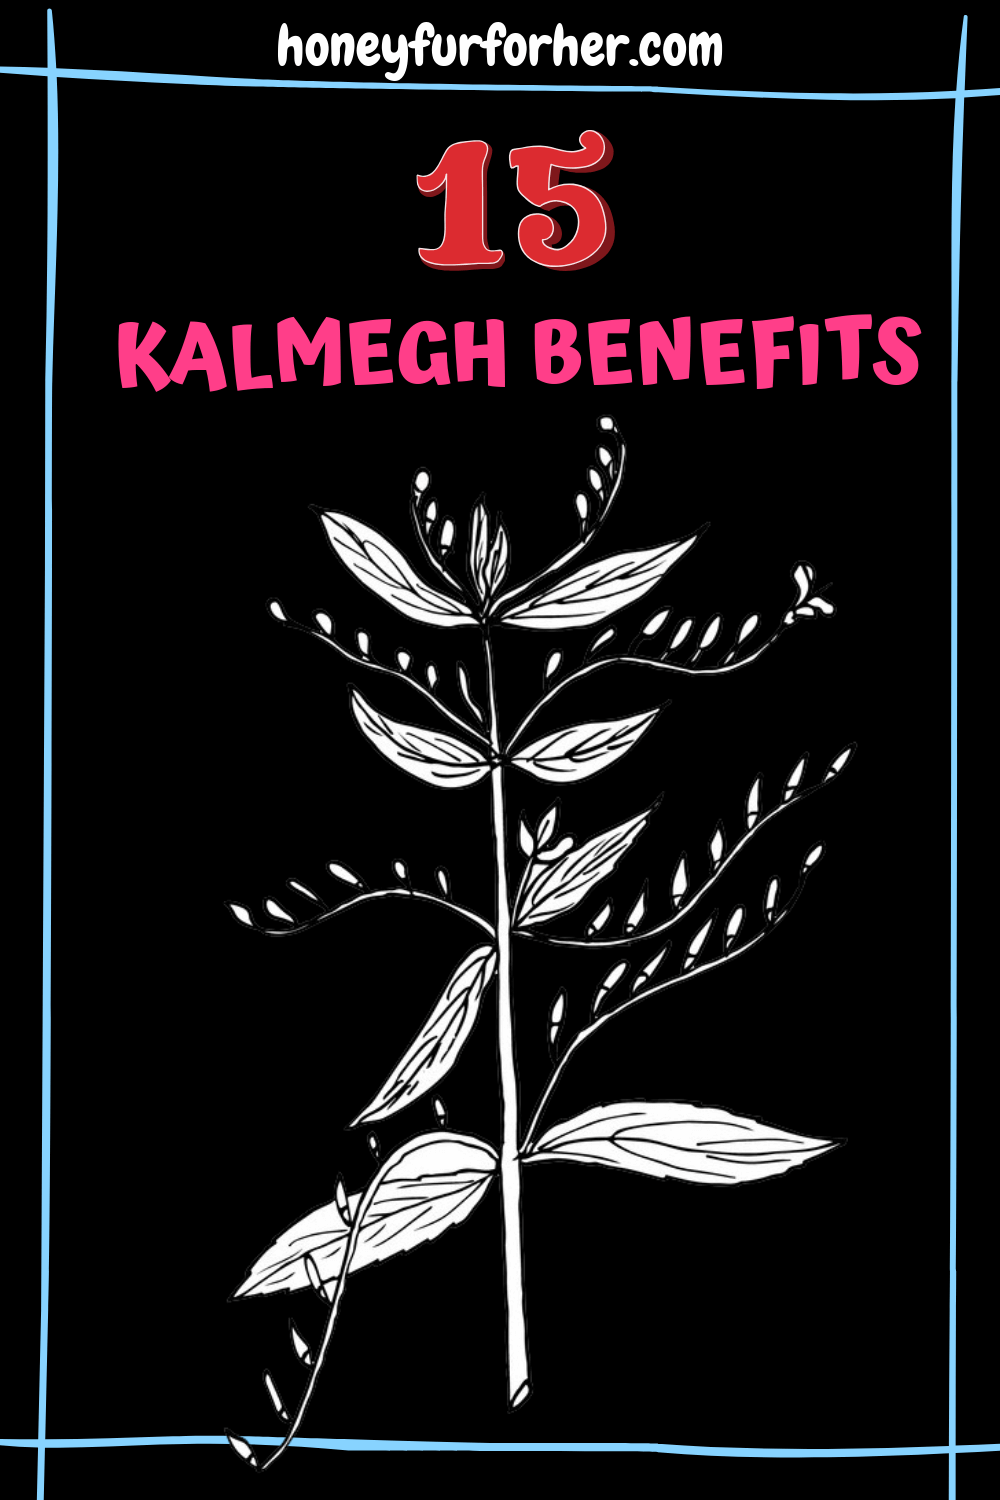 Kalmegh (Andrographis Paniculata) - The King of Bitters - Uses, Benefits, & Side-Effects #herbs #ayurveda #kalmegh #ayurvedicmedicine #honeyfurforher